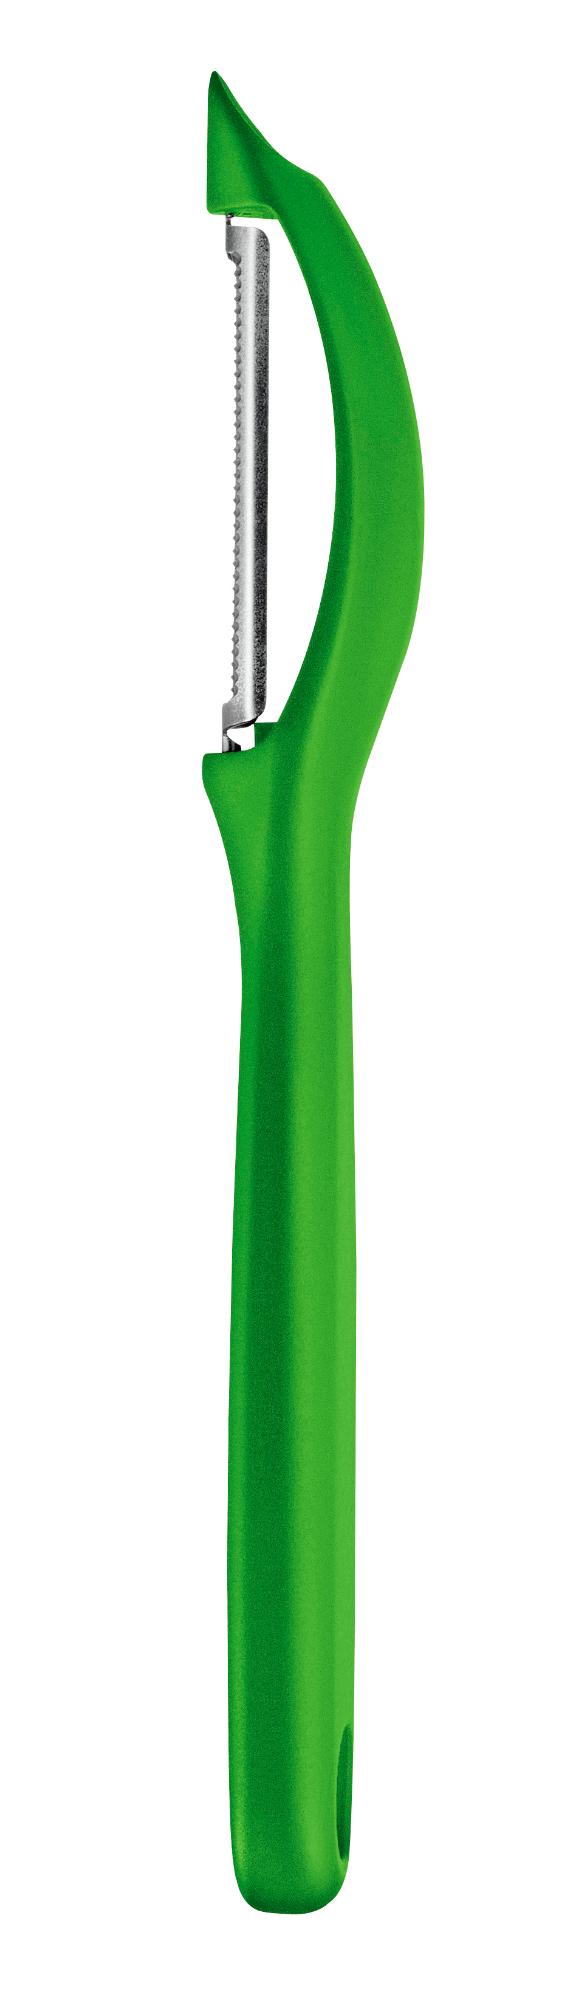 Swiss Classic universal peeler, serrated blade - green